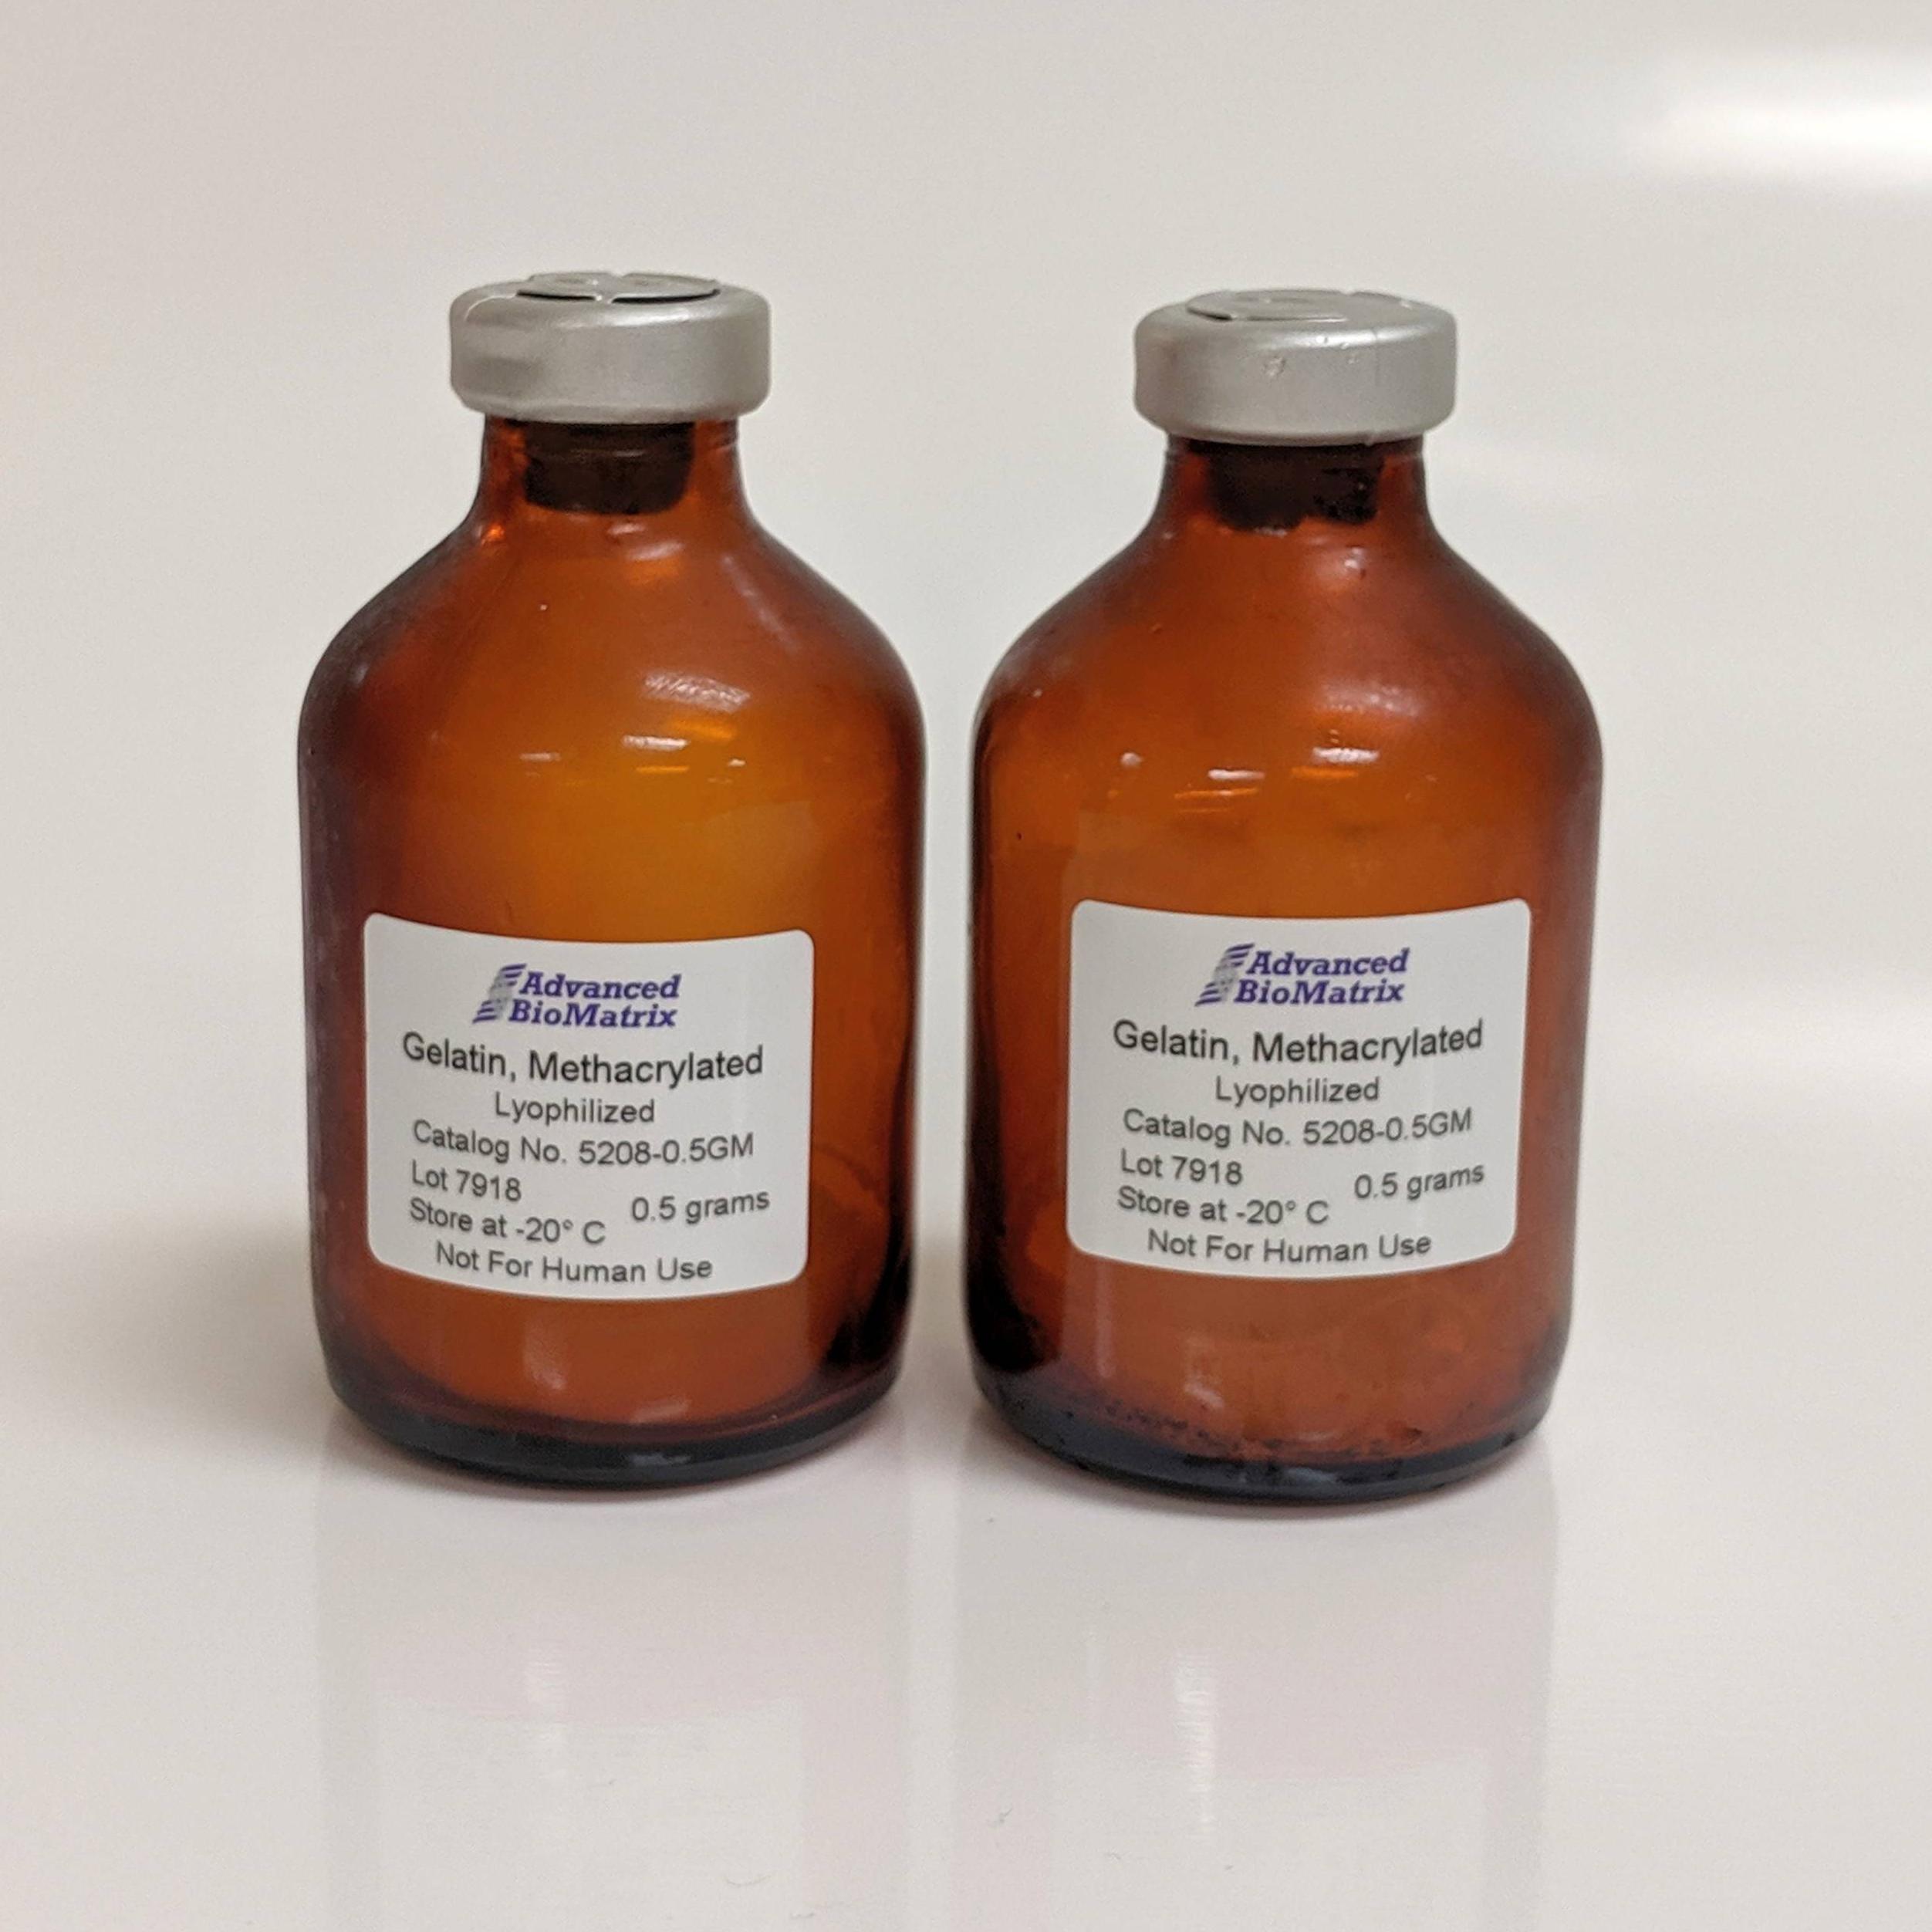 PhotoGel GelMa methacrylated Gelatin from Advanced BioMatrix